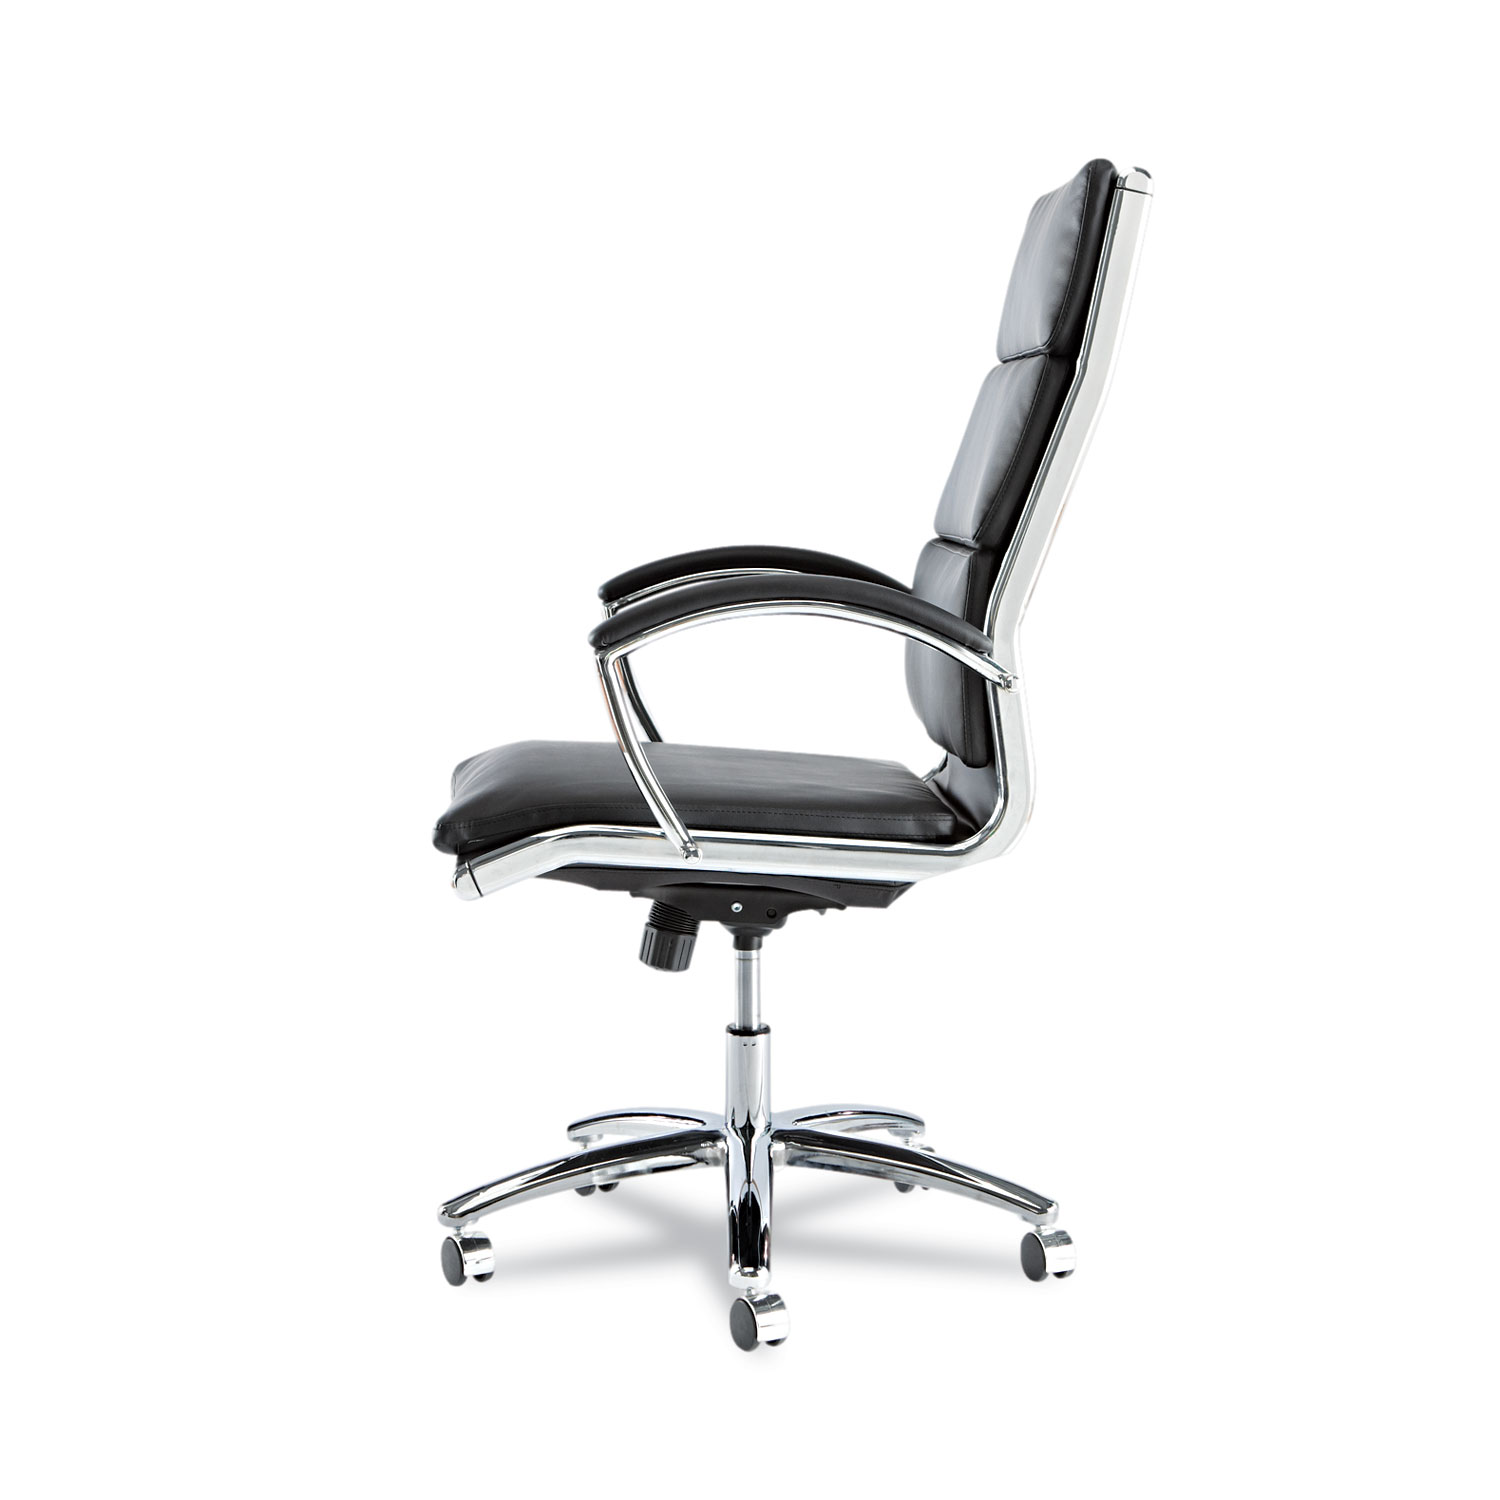 Alera Neratoli High-Back Slim Profile Chair, Faux Leather, 275 lb Cap, 17.32" to 21.25" Seat Height, Black Seat/Back, Chrome - image 4 of 10